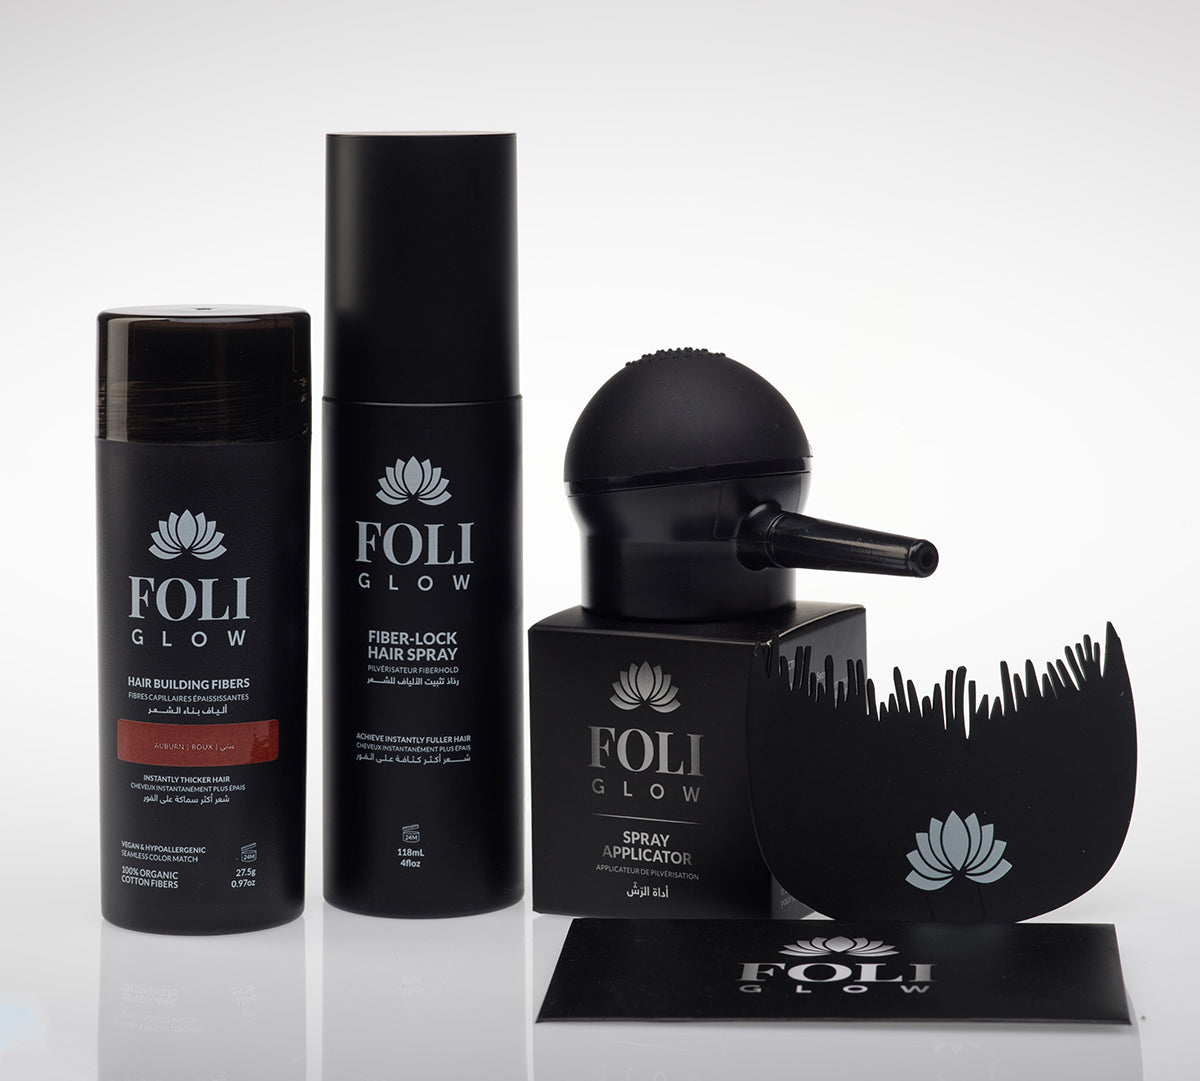 Foliglow Complete Hair Transformation Kit hair building fiber fiber lock hair spray applicator hairline optimizer auburn